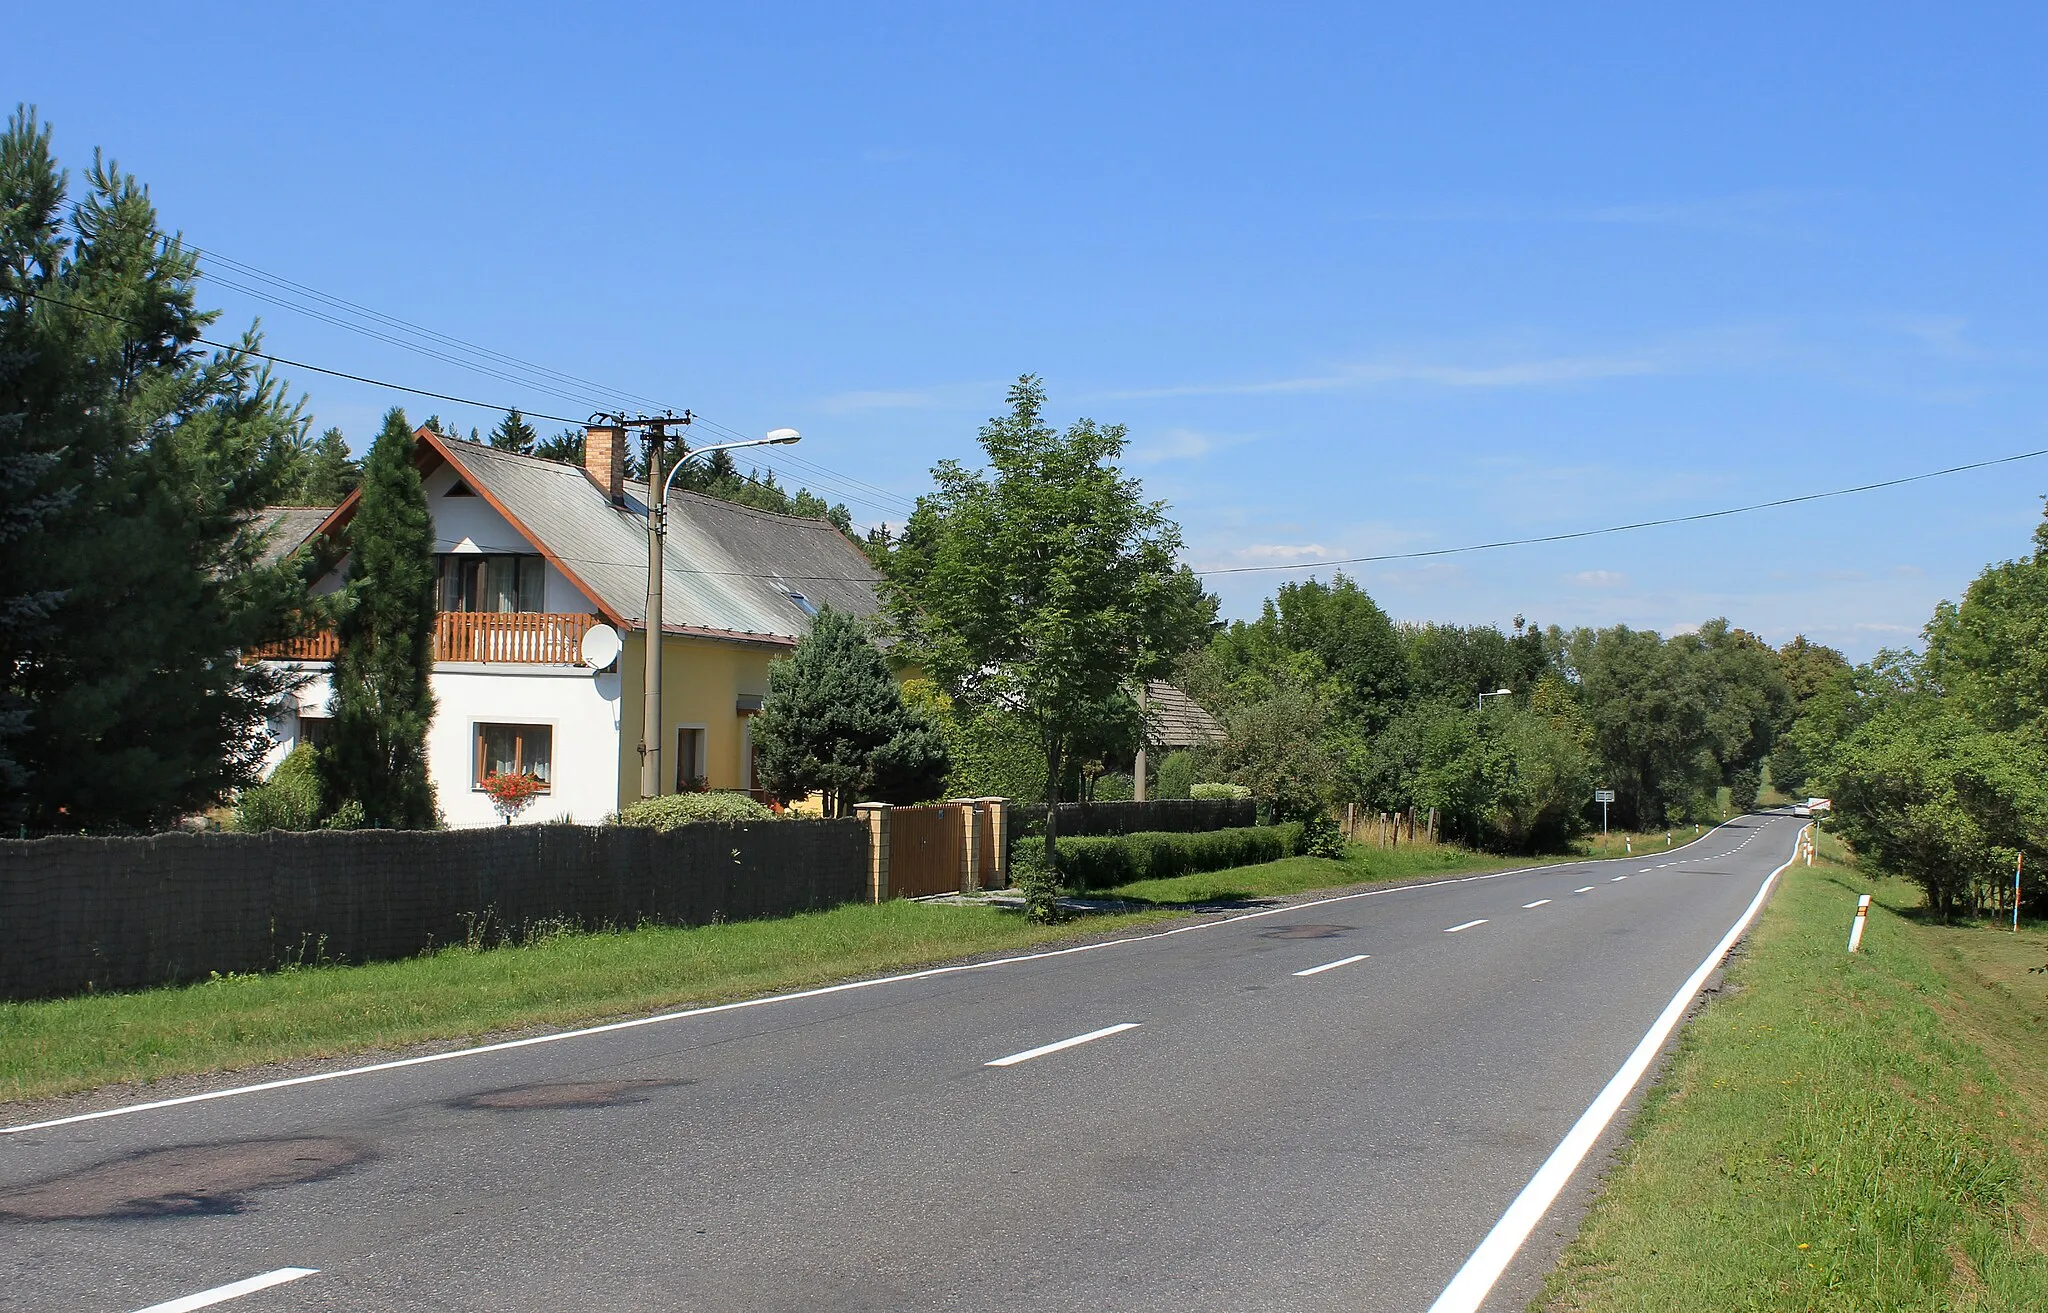 Photo showing: Road No 366 in Kukle, Czech Republic.